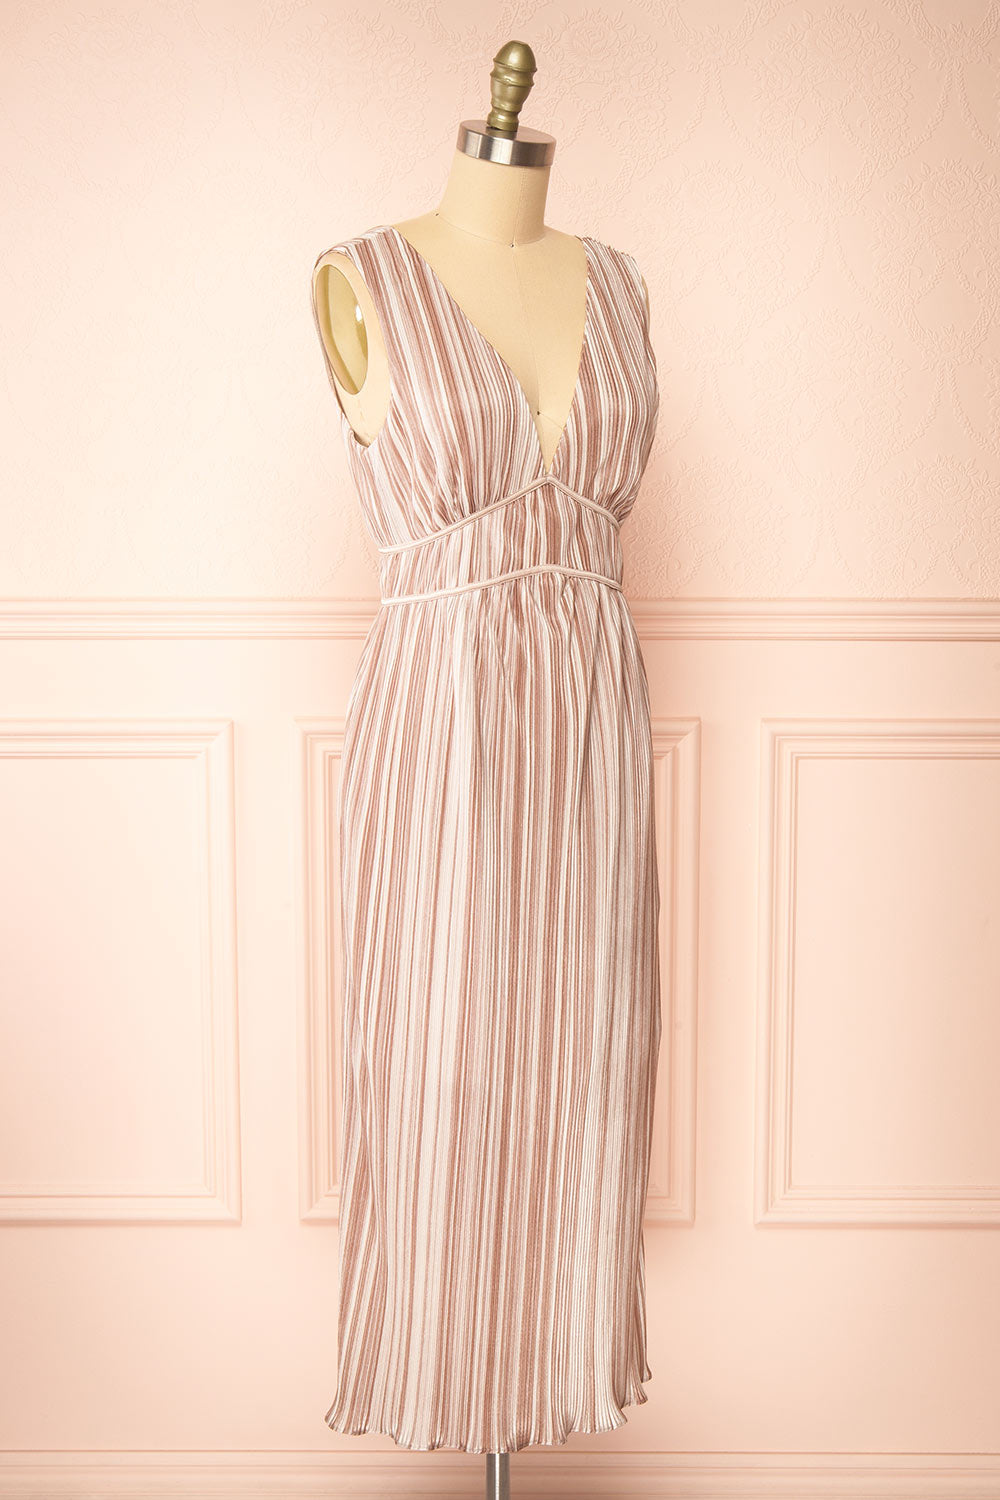 Gloriane Pleated Beige Multi-Tone Dress | Boutique 1861 side view